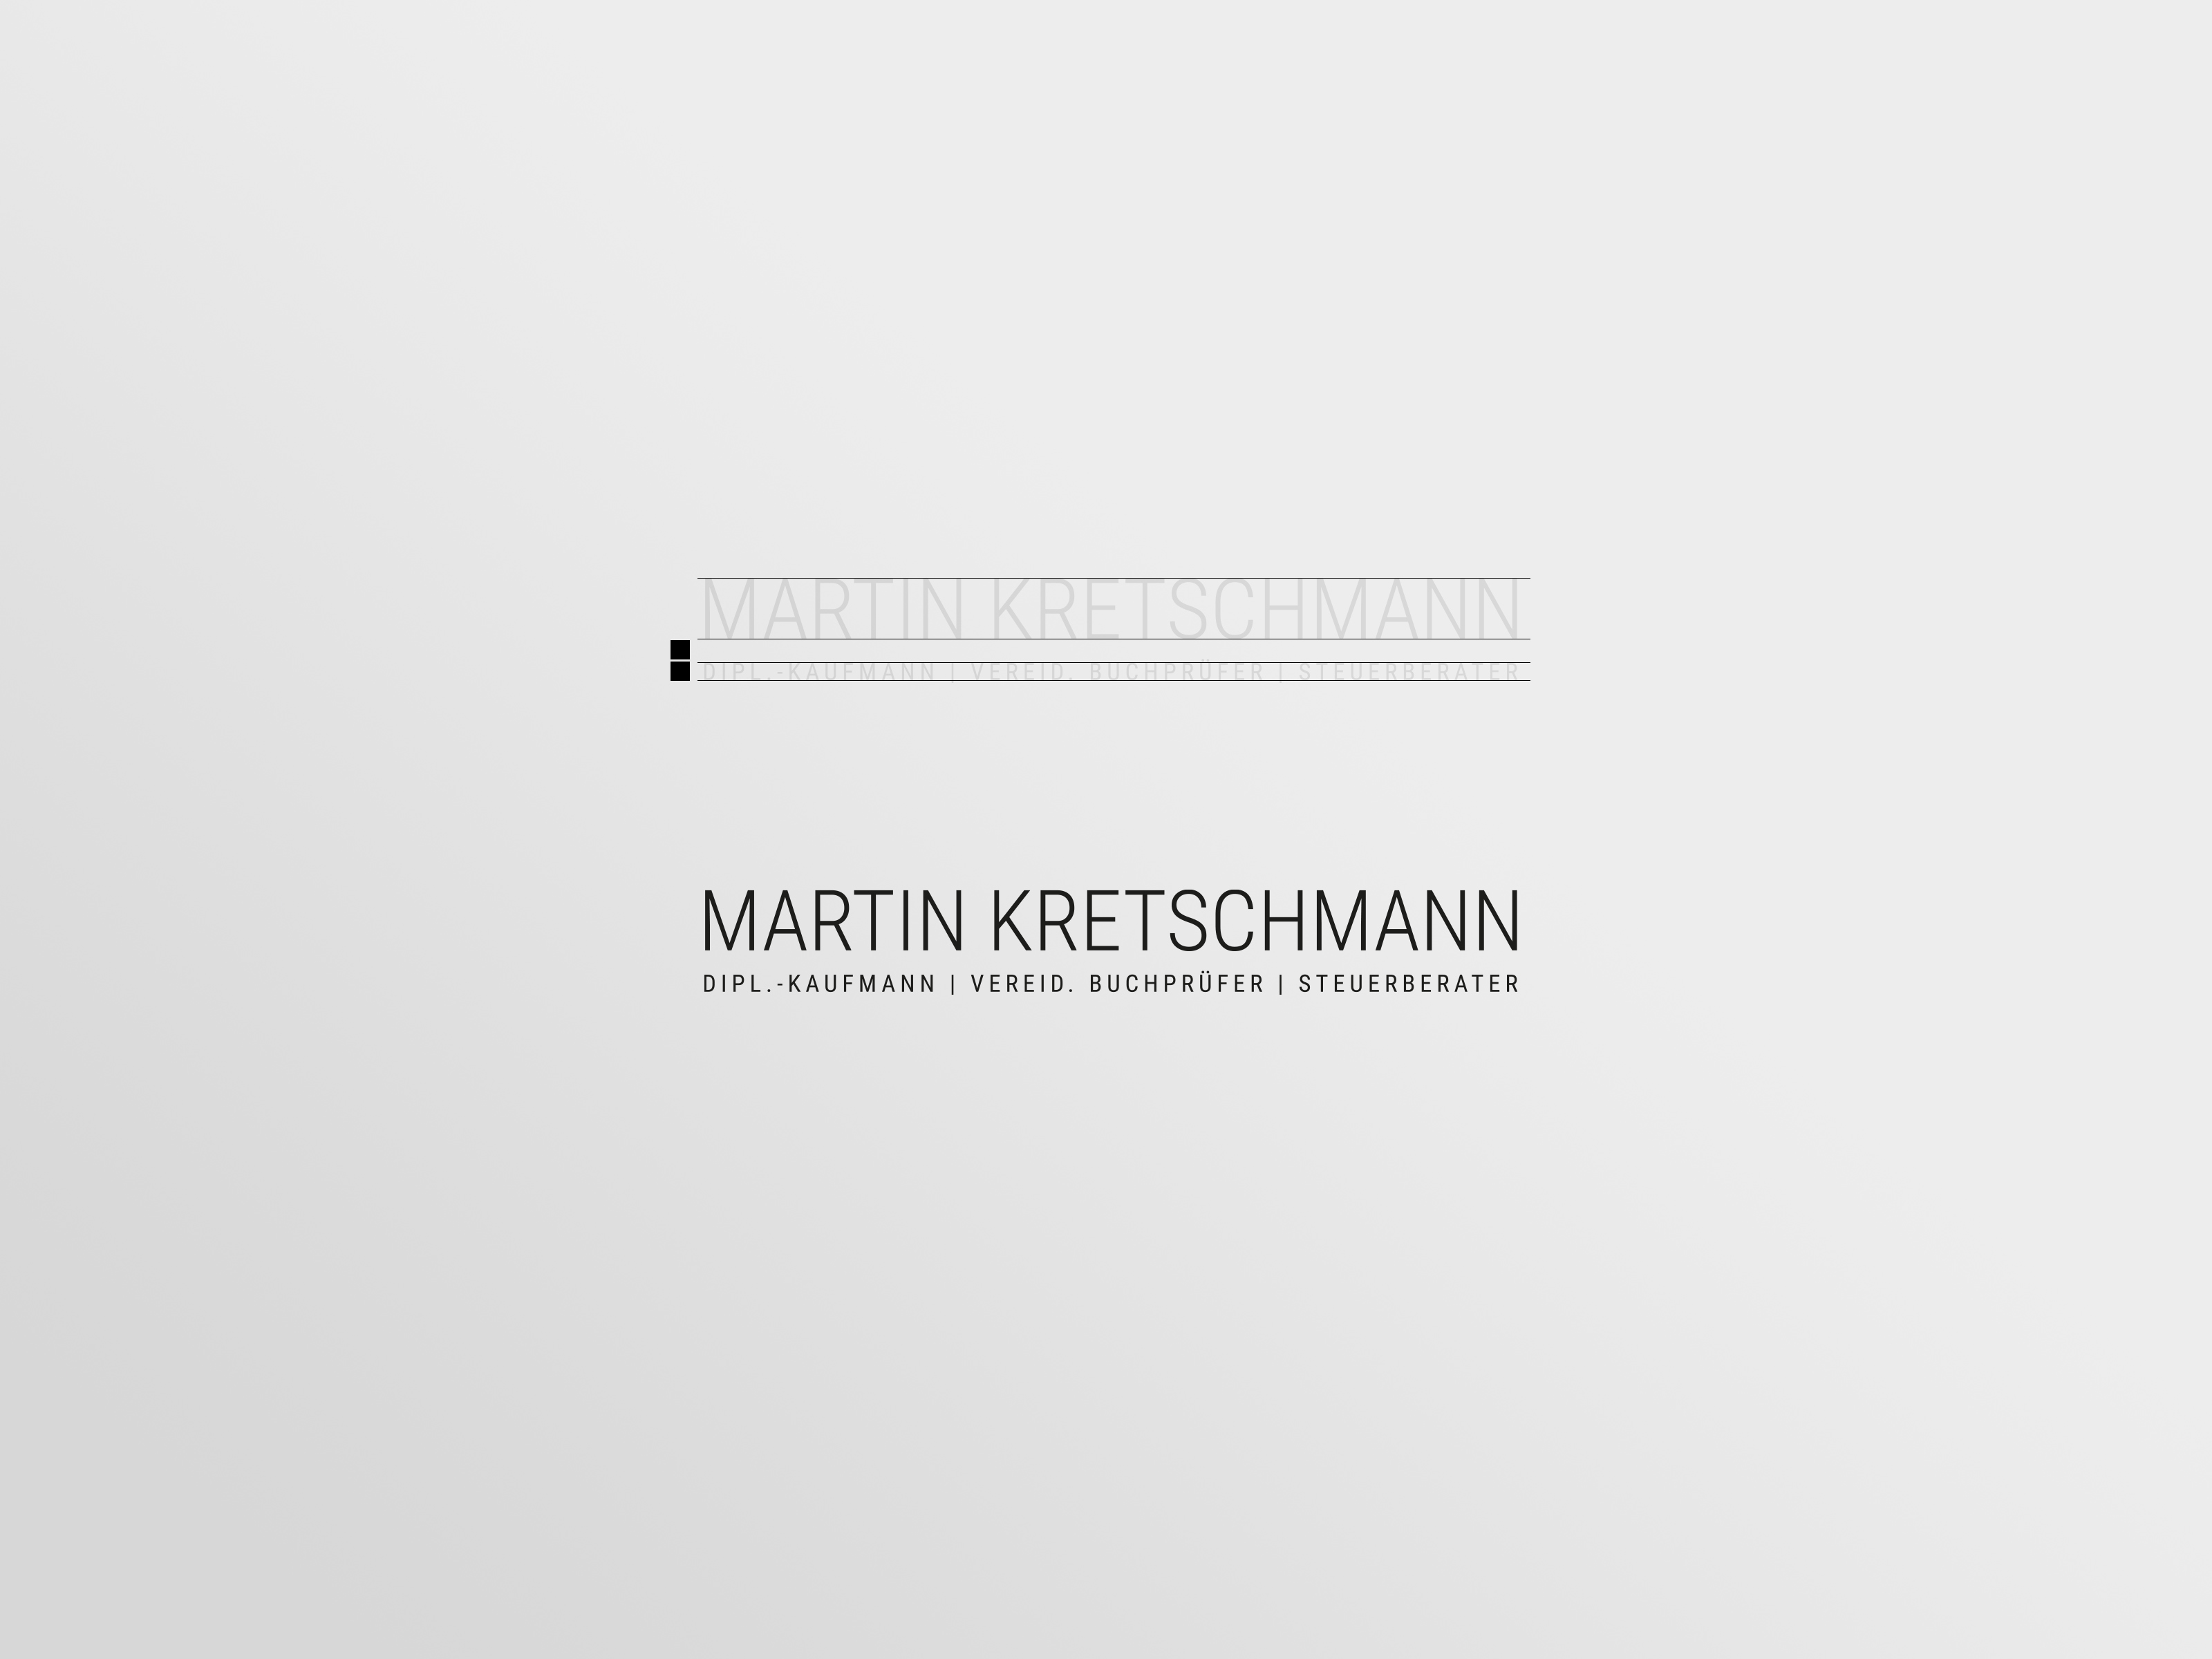 neuland-dribbble-steuerbuero-martin-kretschmann-corporate-design-02.jpg